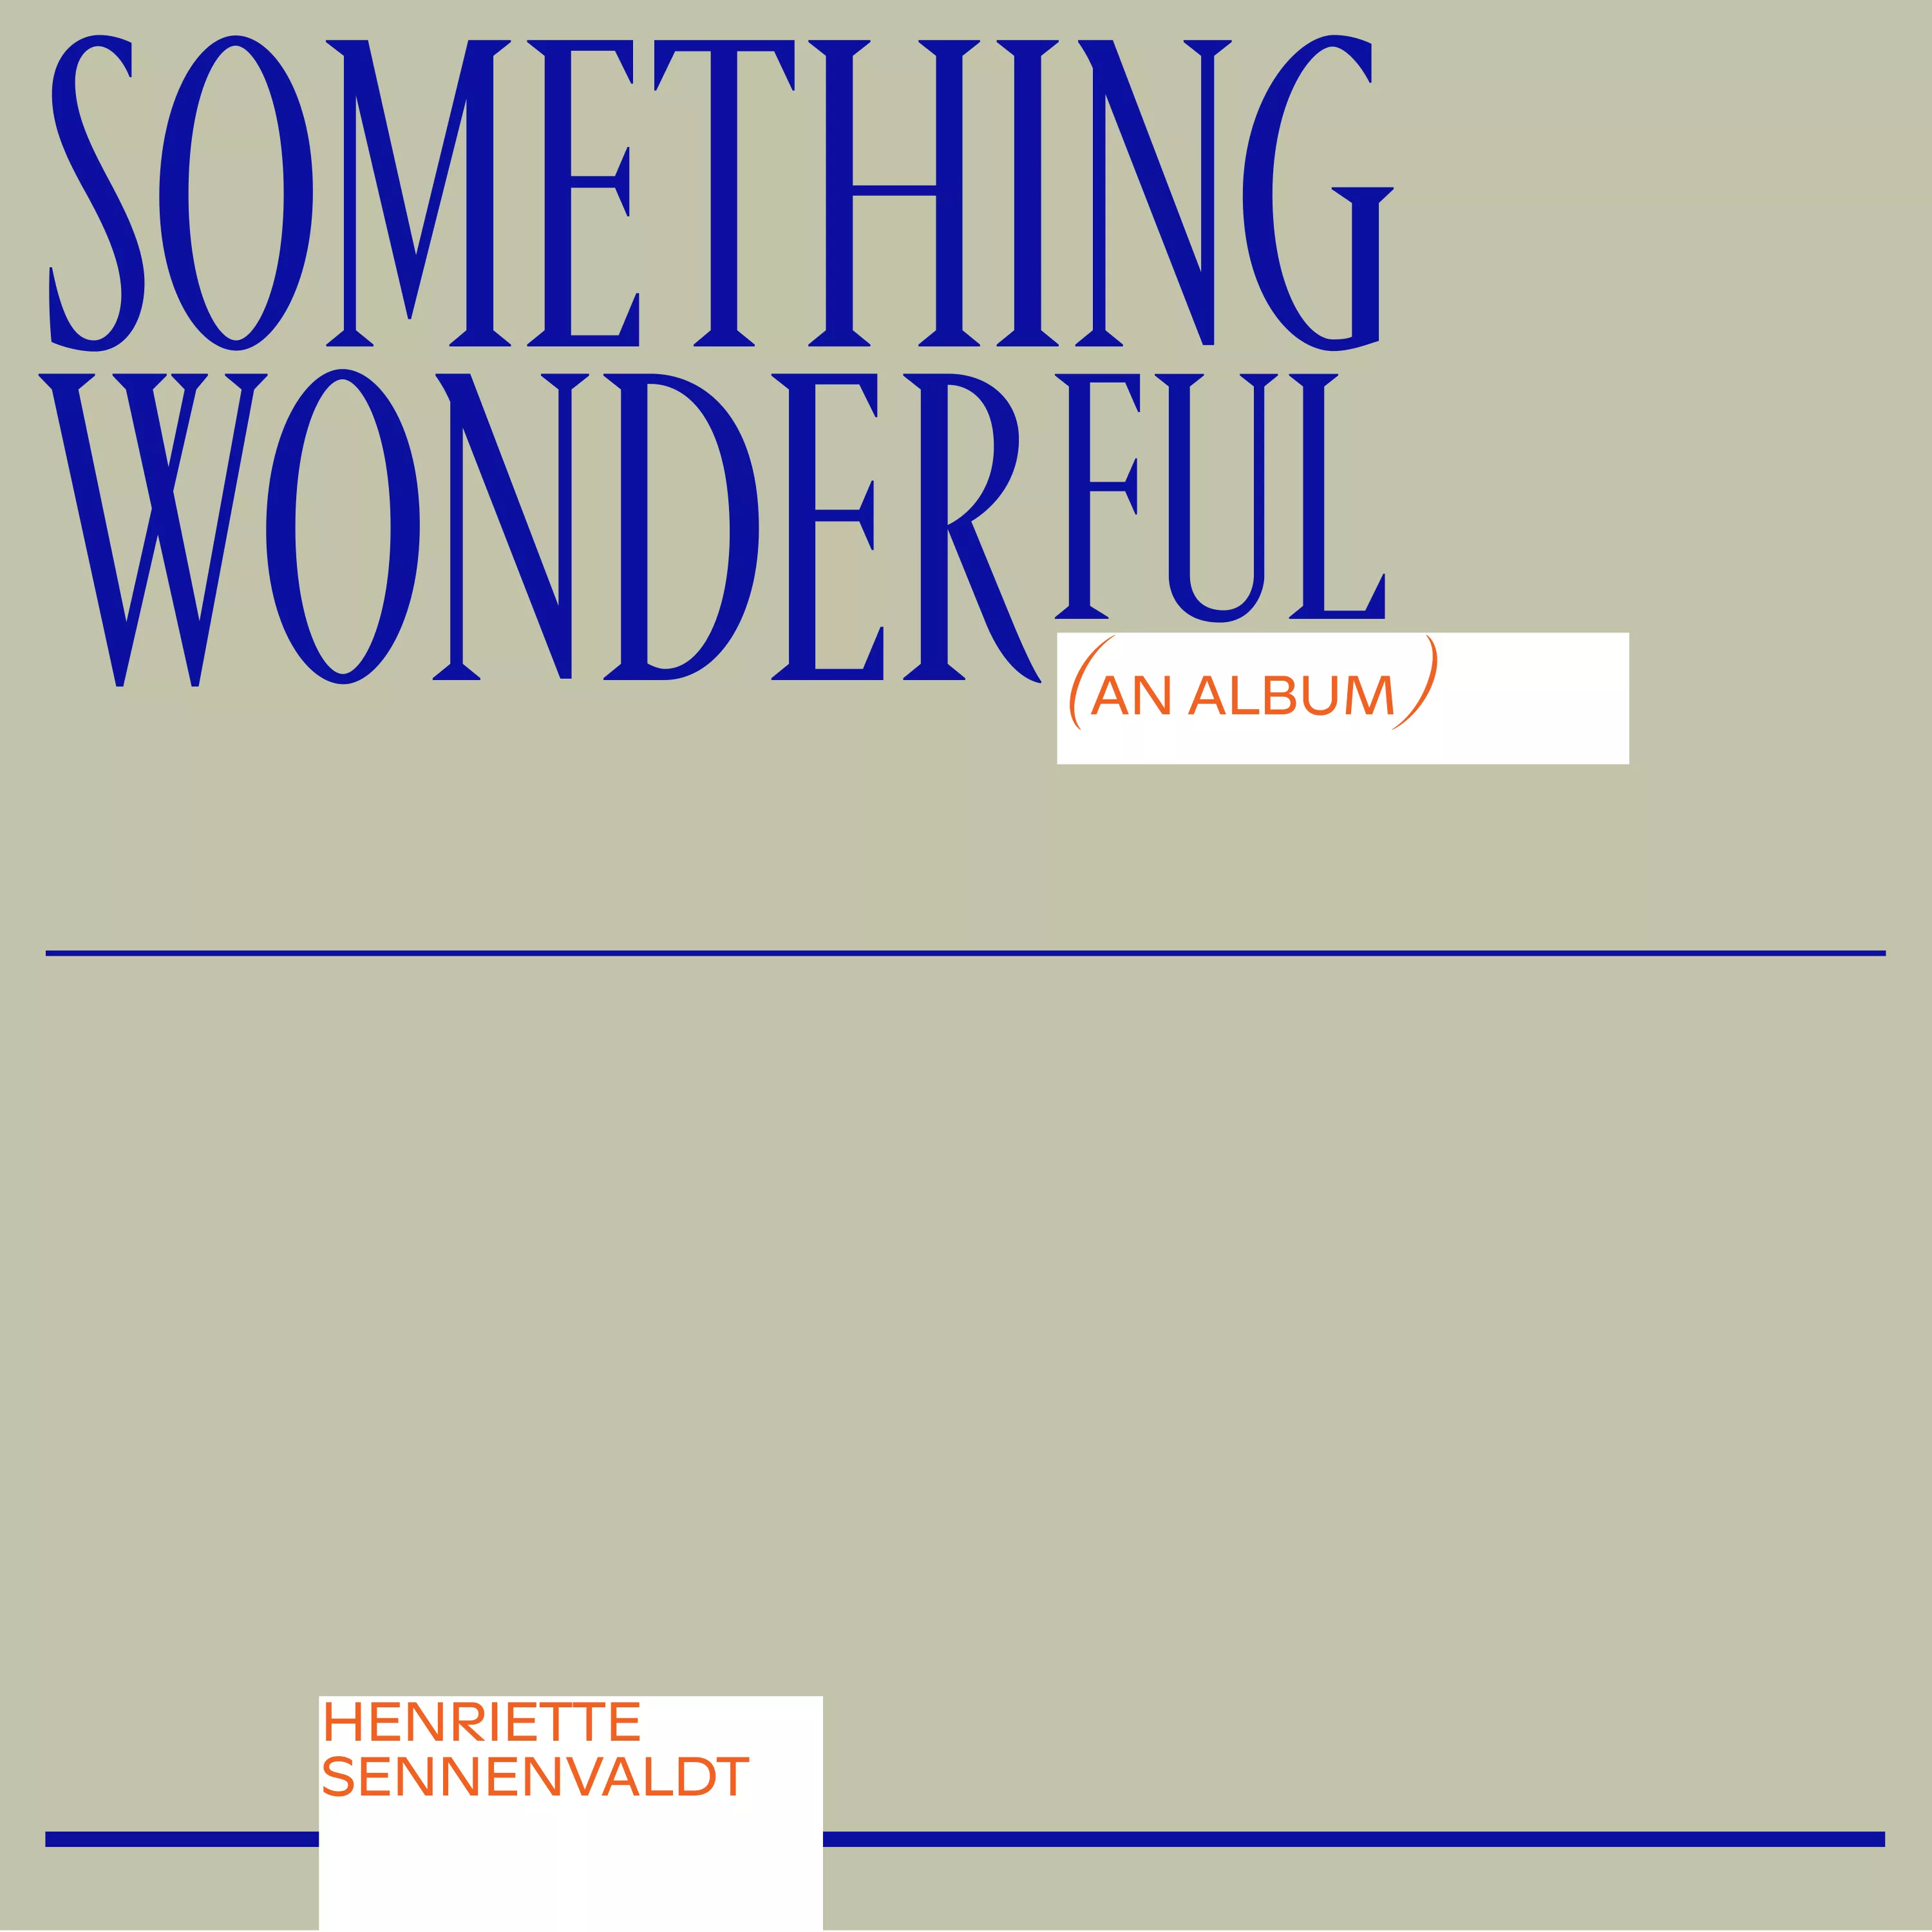 Something Wonderful - Henriette Sennenvaldt